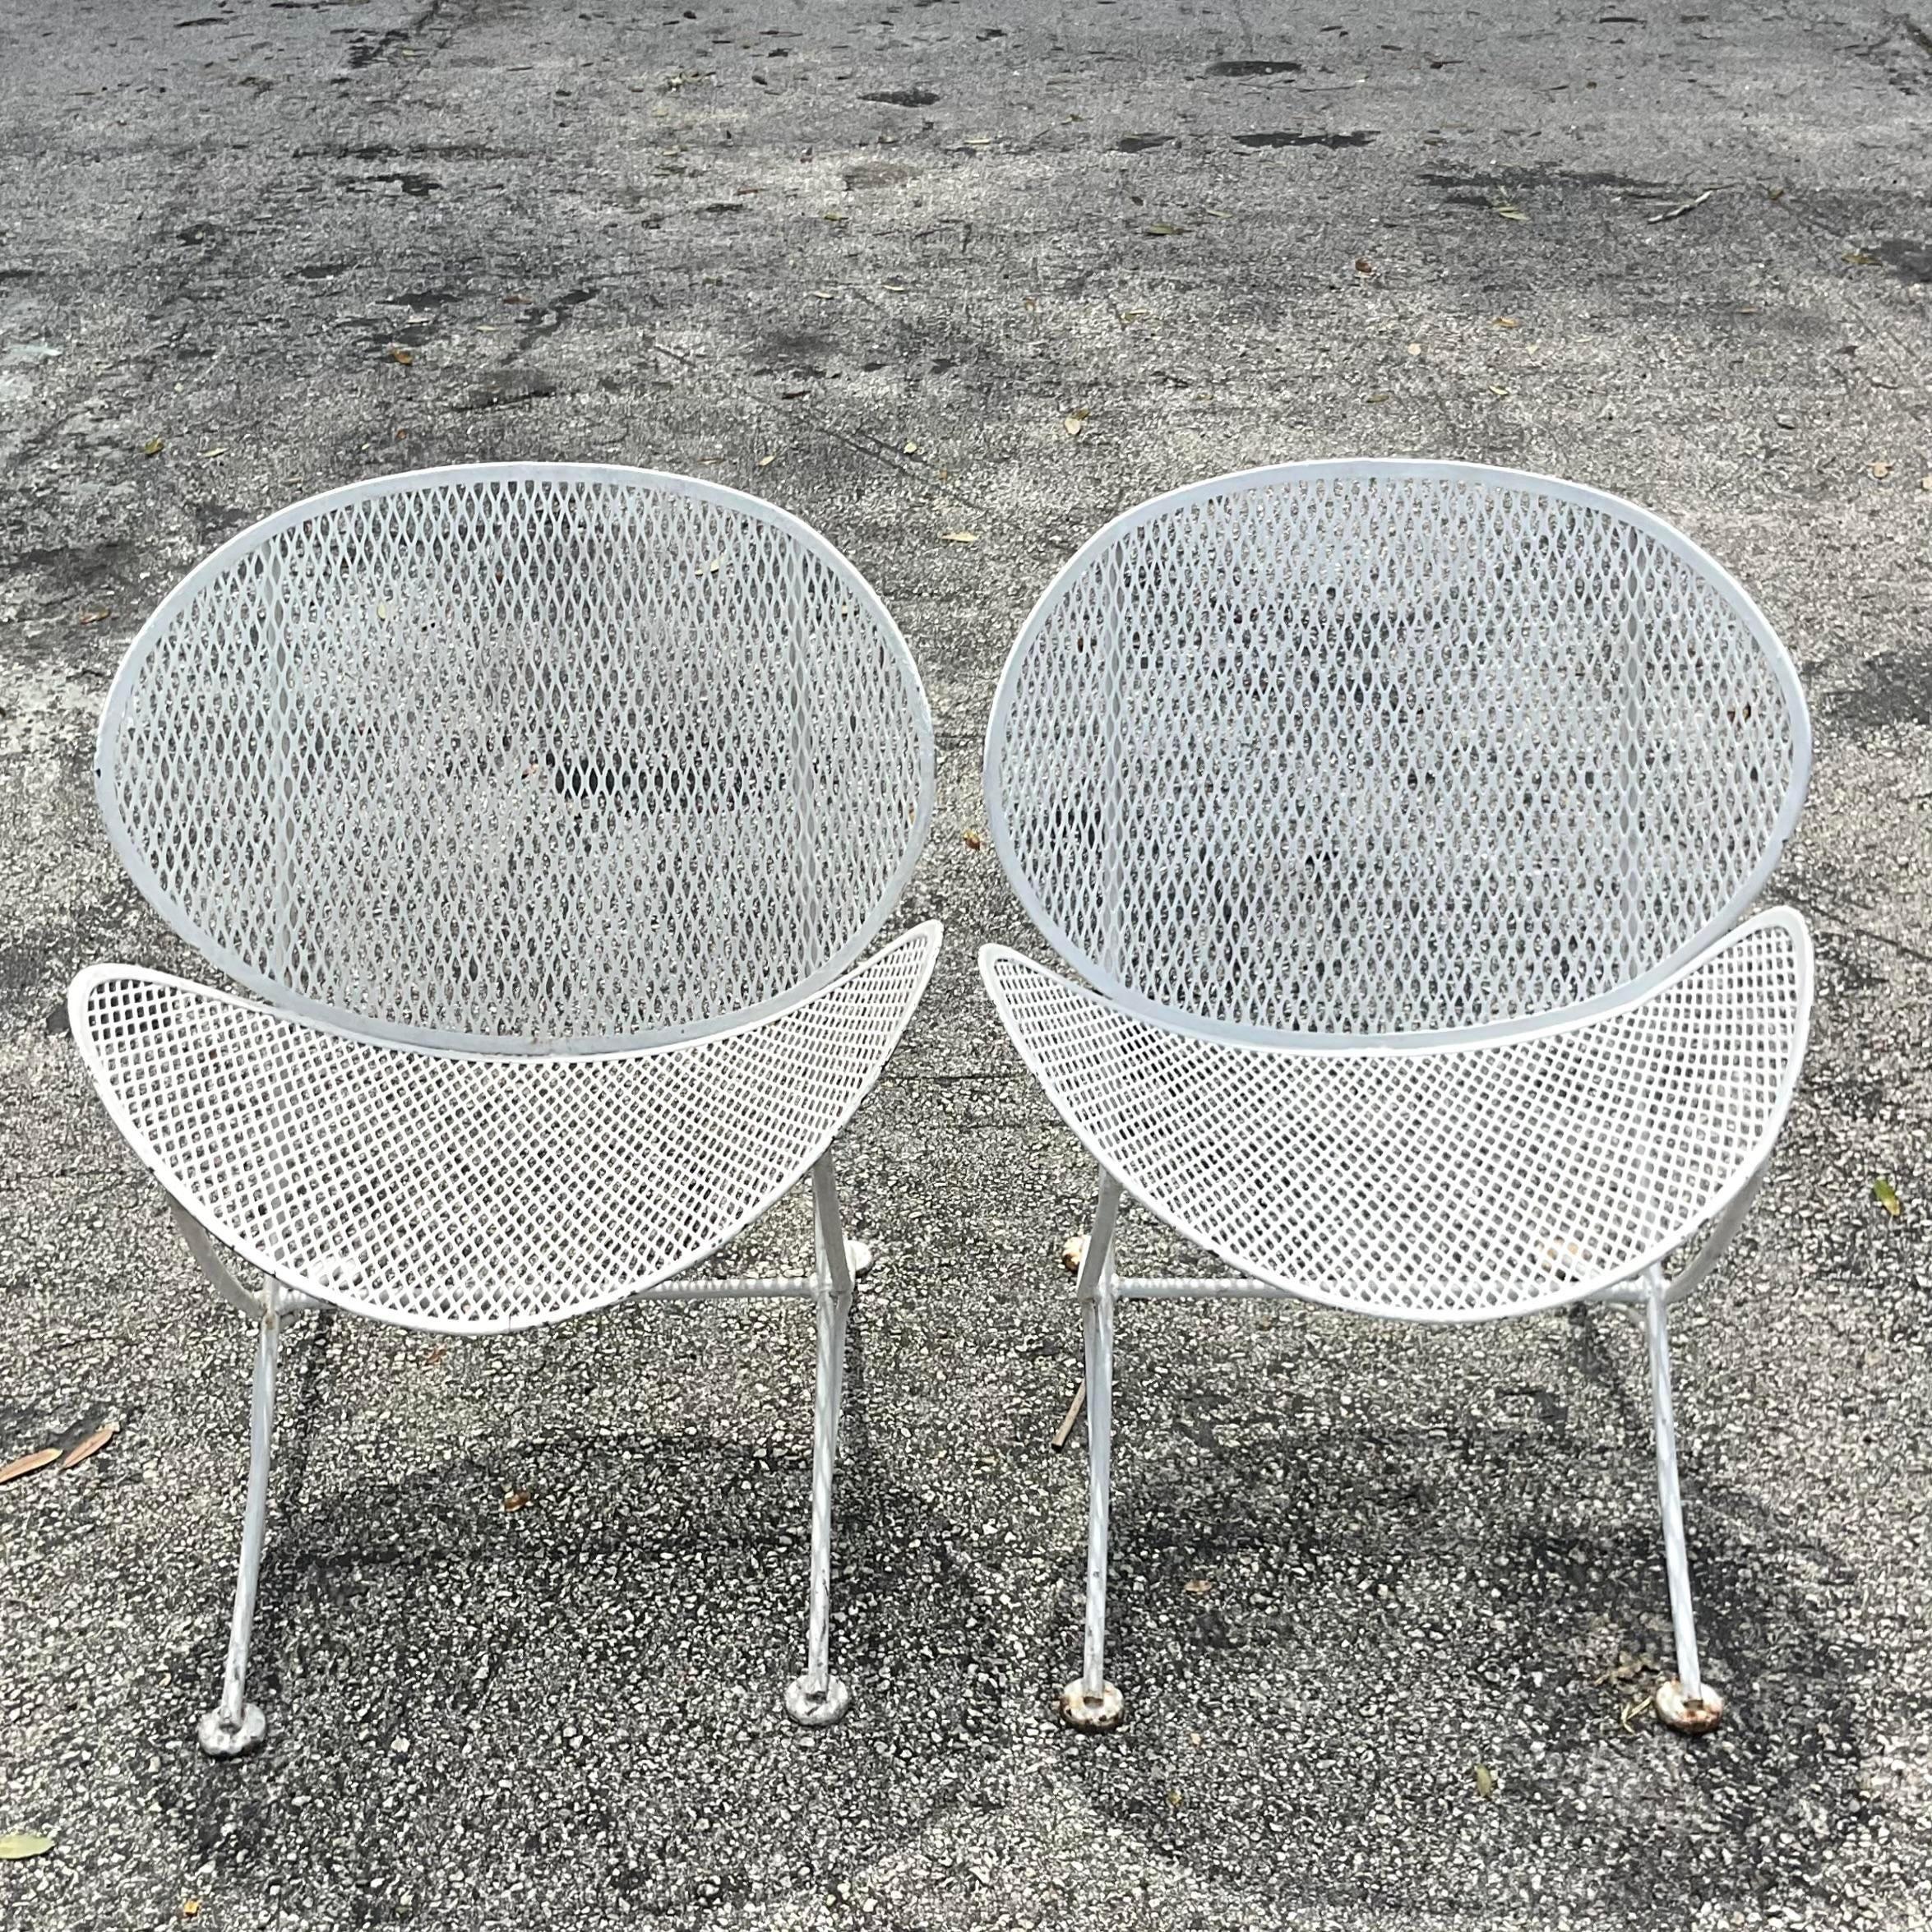 American Vintage Mid-Century Modern Salterini Wrought Iron “Orange Slice” Chairs - a Pair